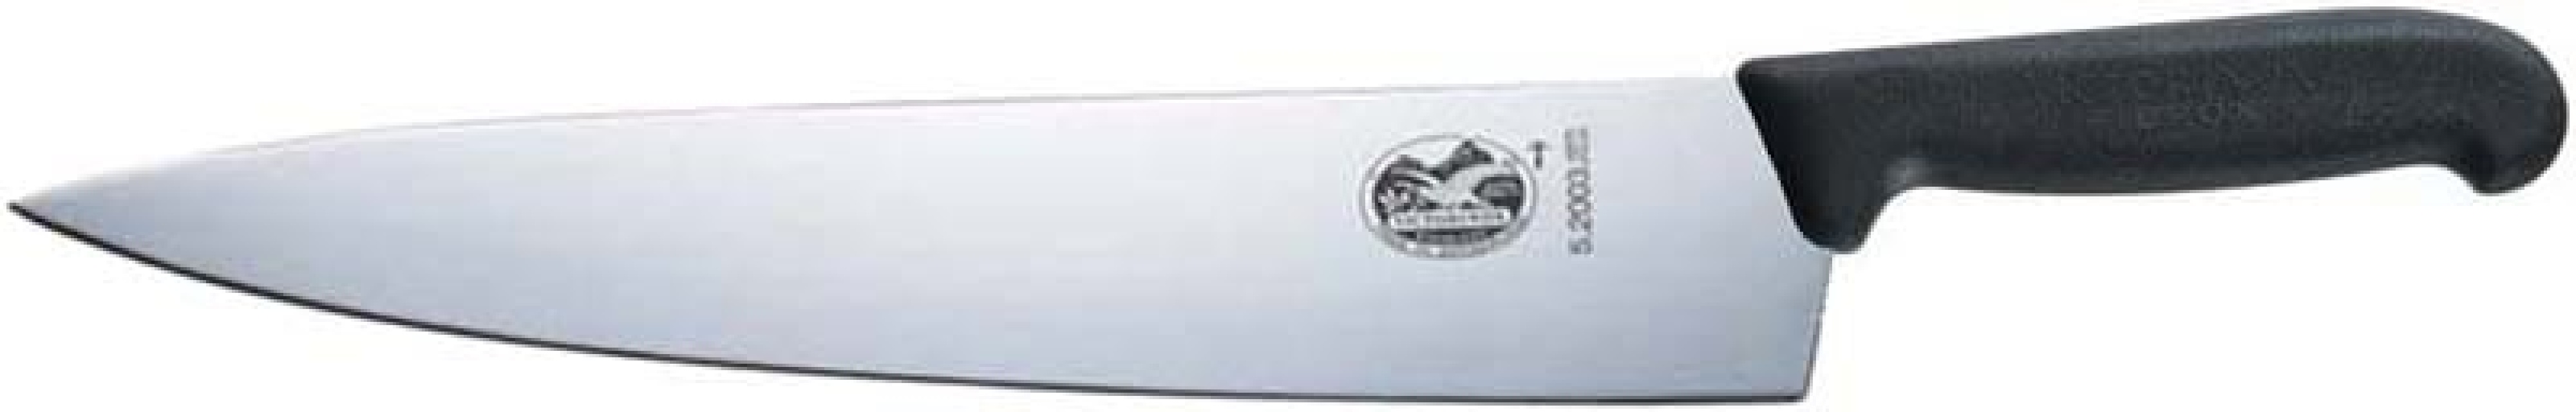 Chef's knife Victorinox 31 cm / fibrox handle